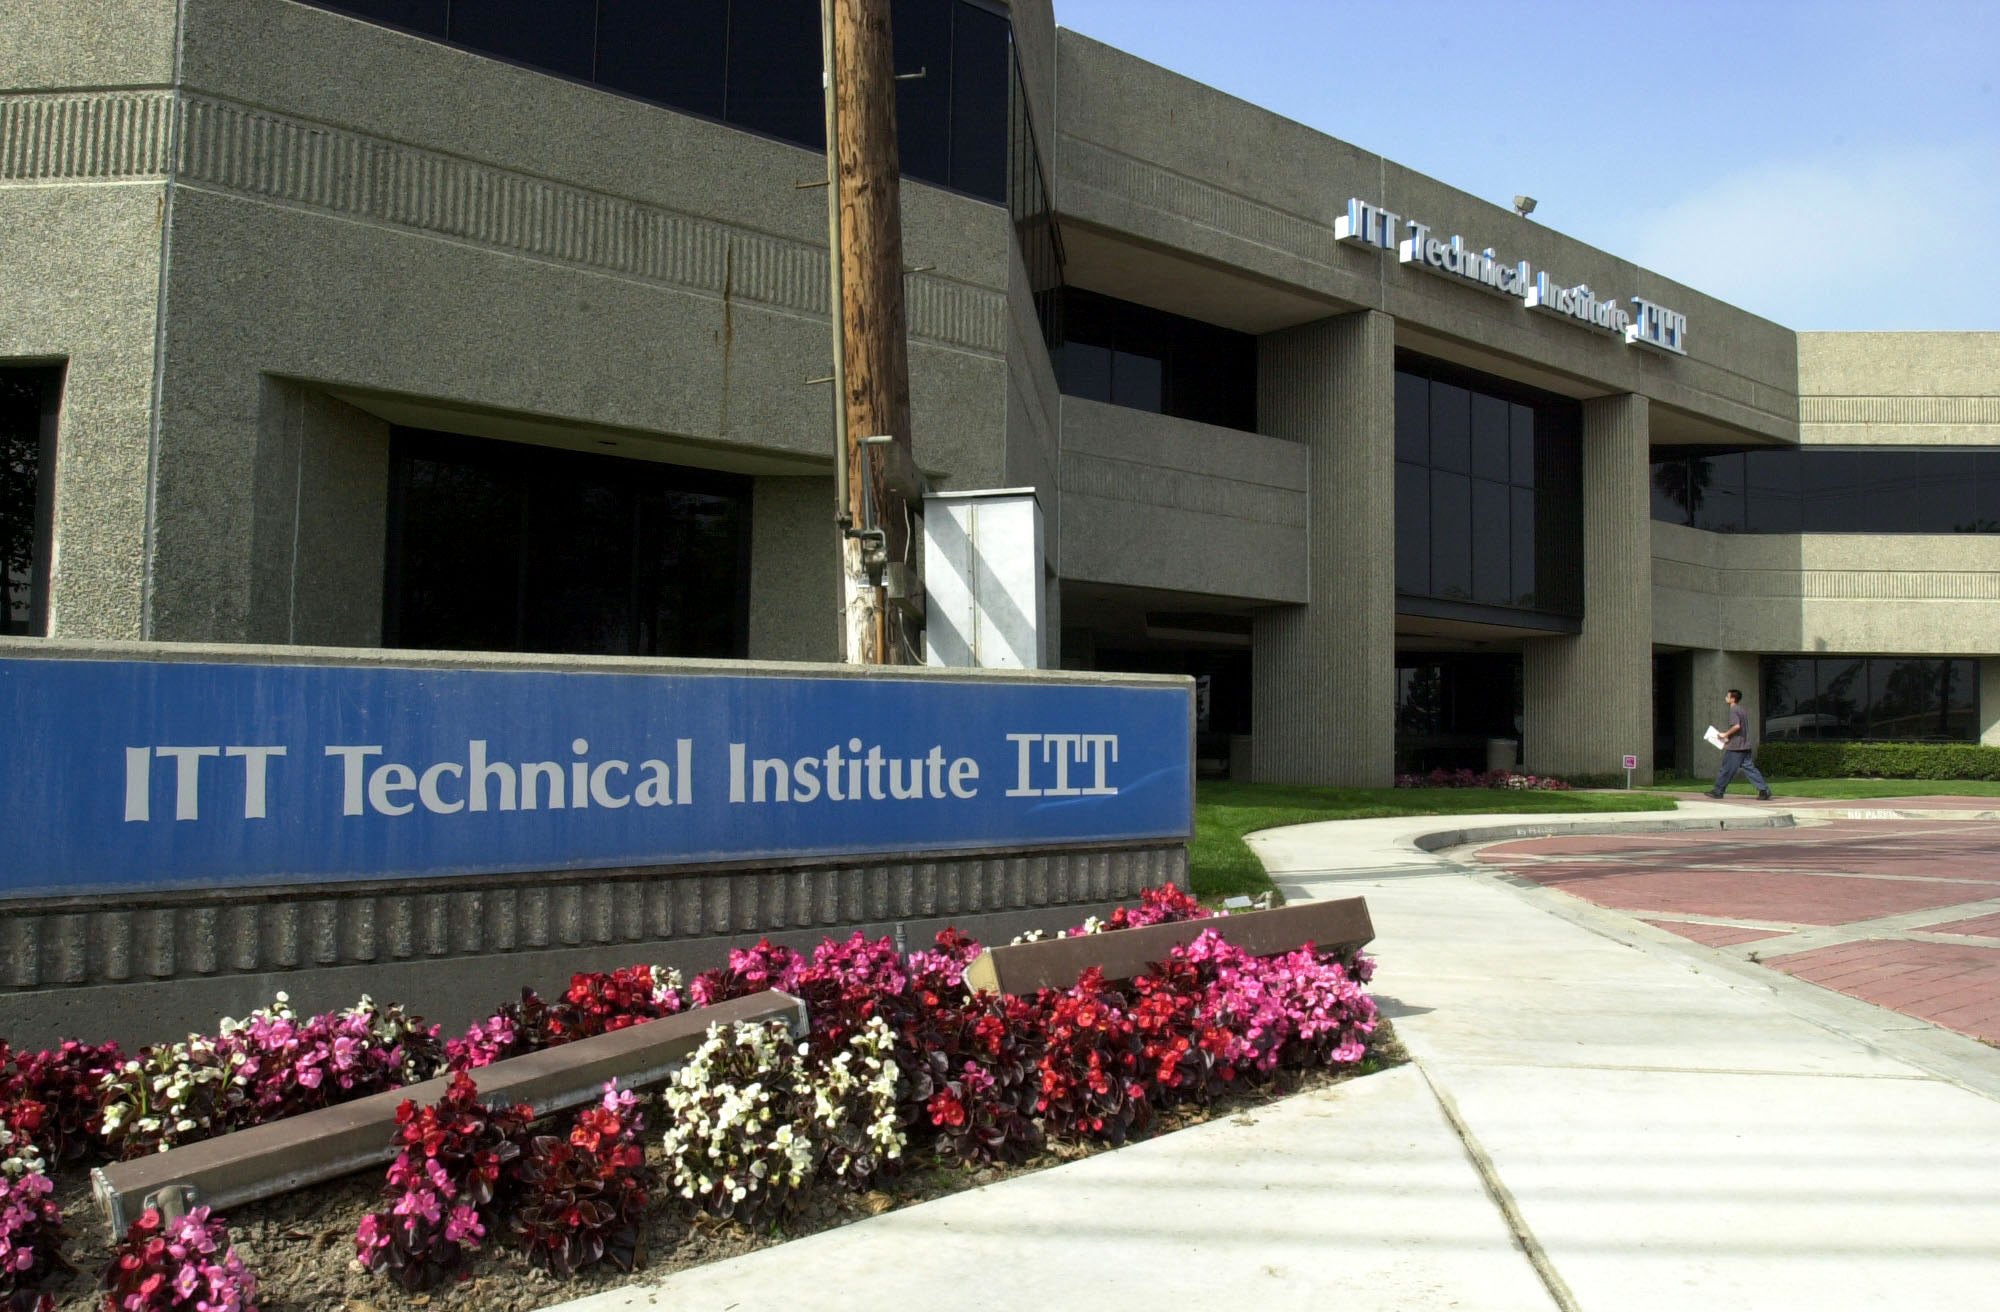 This is the campus of ITT Technical Institute in Anaheim, Ca